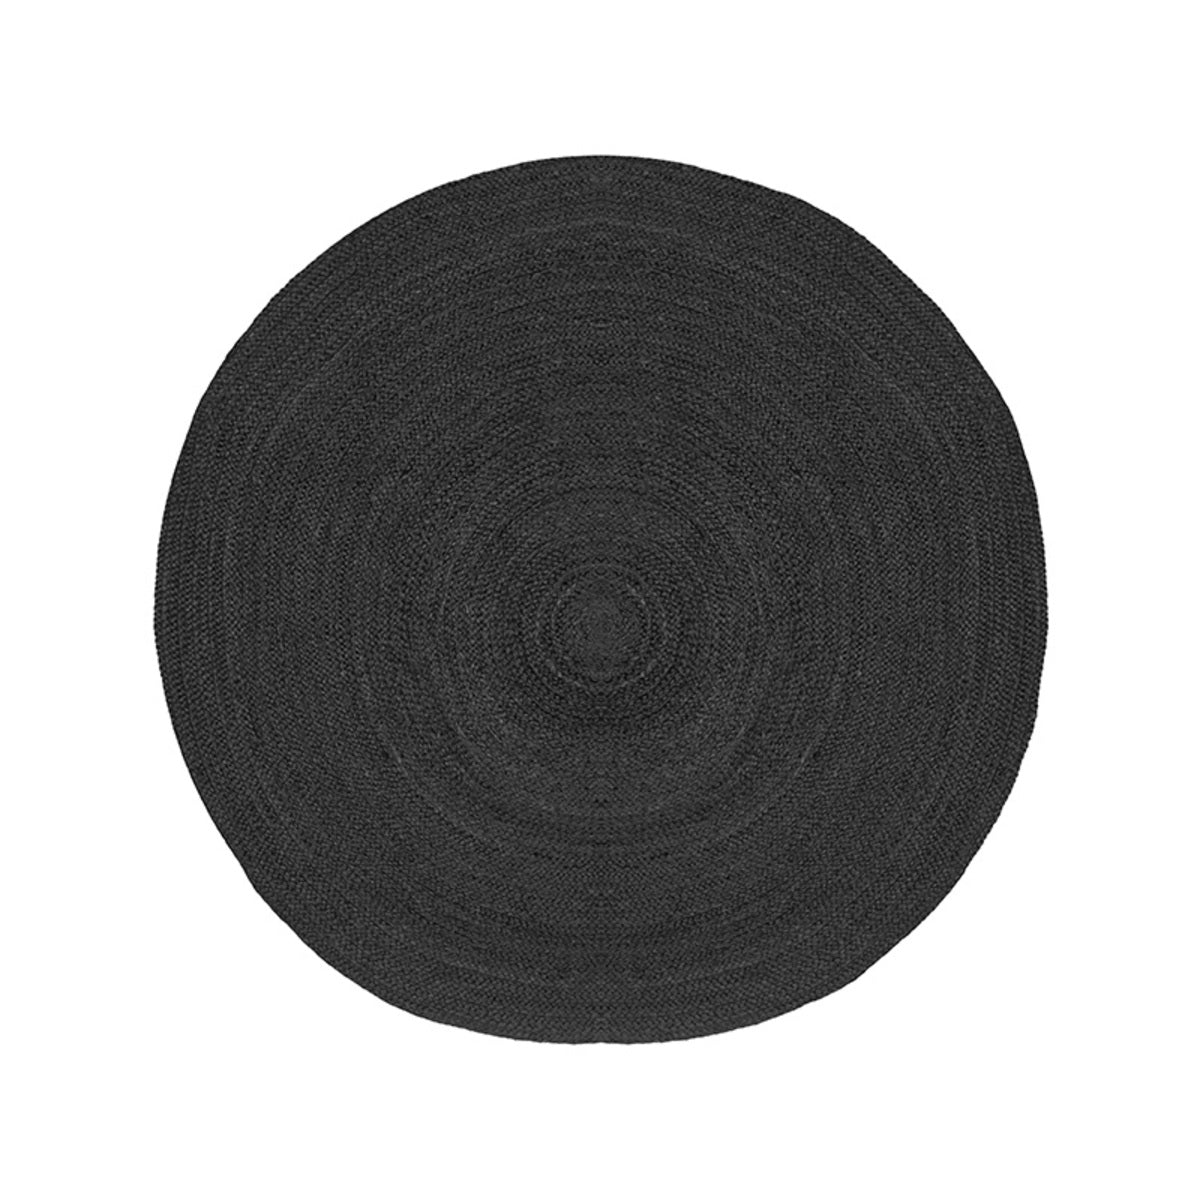 LABEL51 Rugs Jute - Black - Jute - 150x150 cm